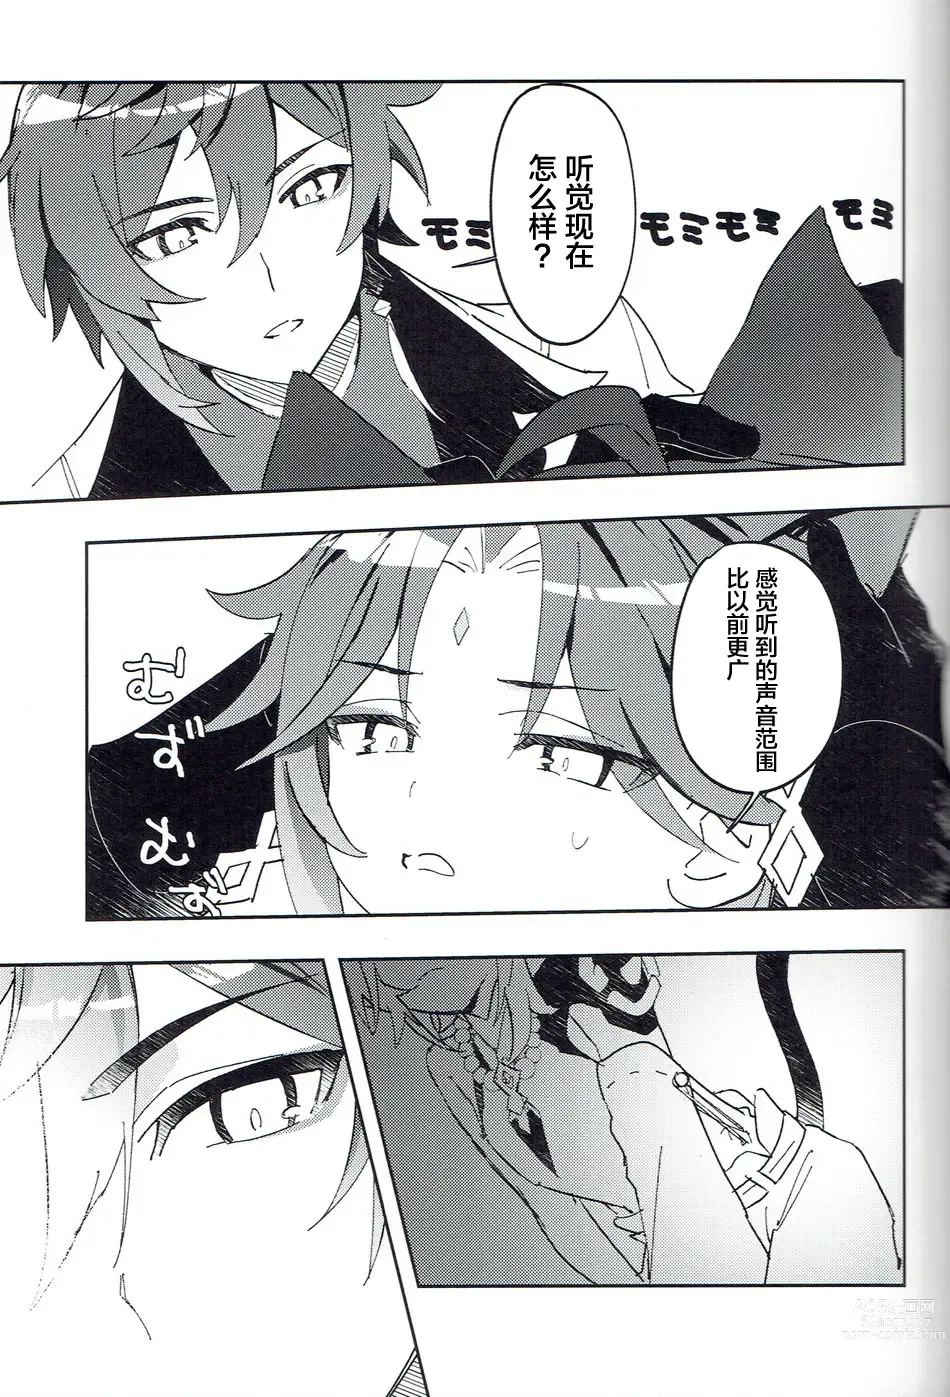 Page 8 of doujinshi Soredokoro dewa nai